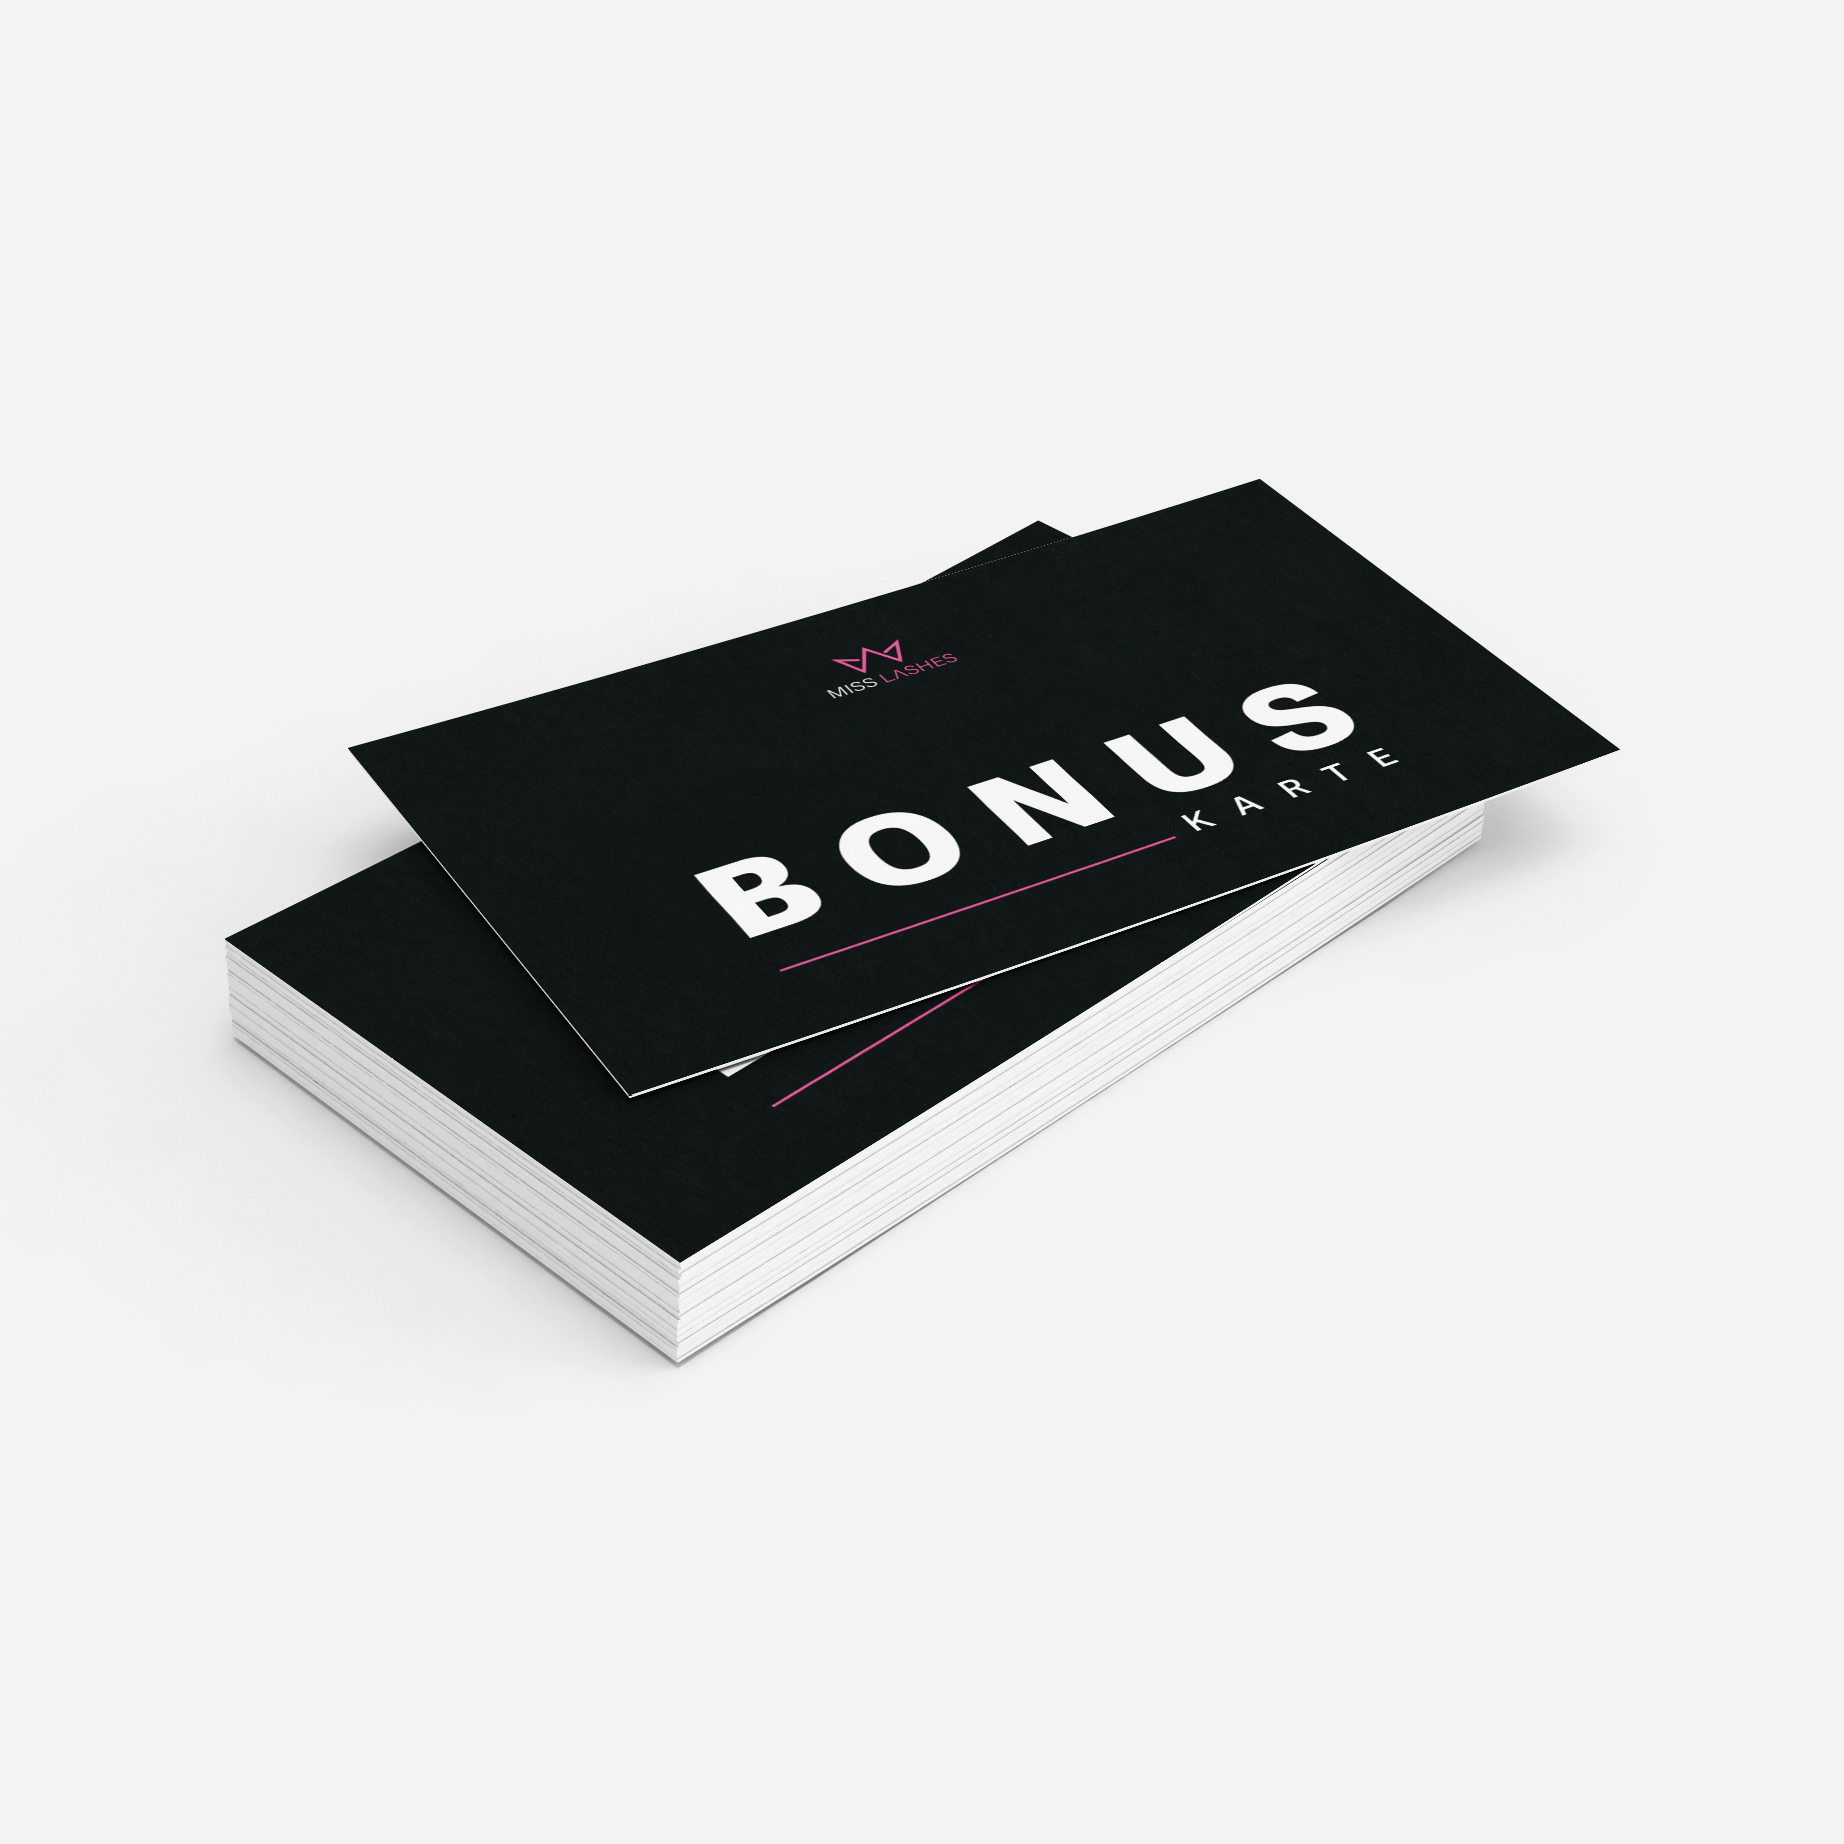 Loyality Card | Bonus Karte | 50 Stück